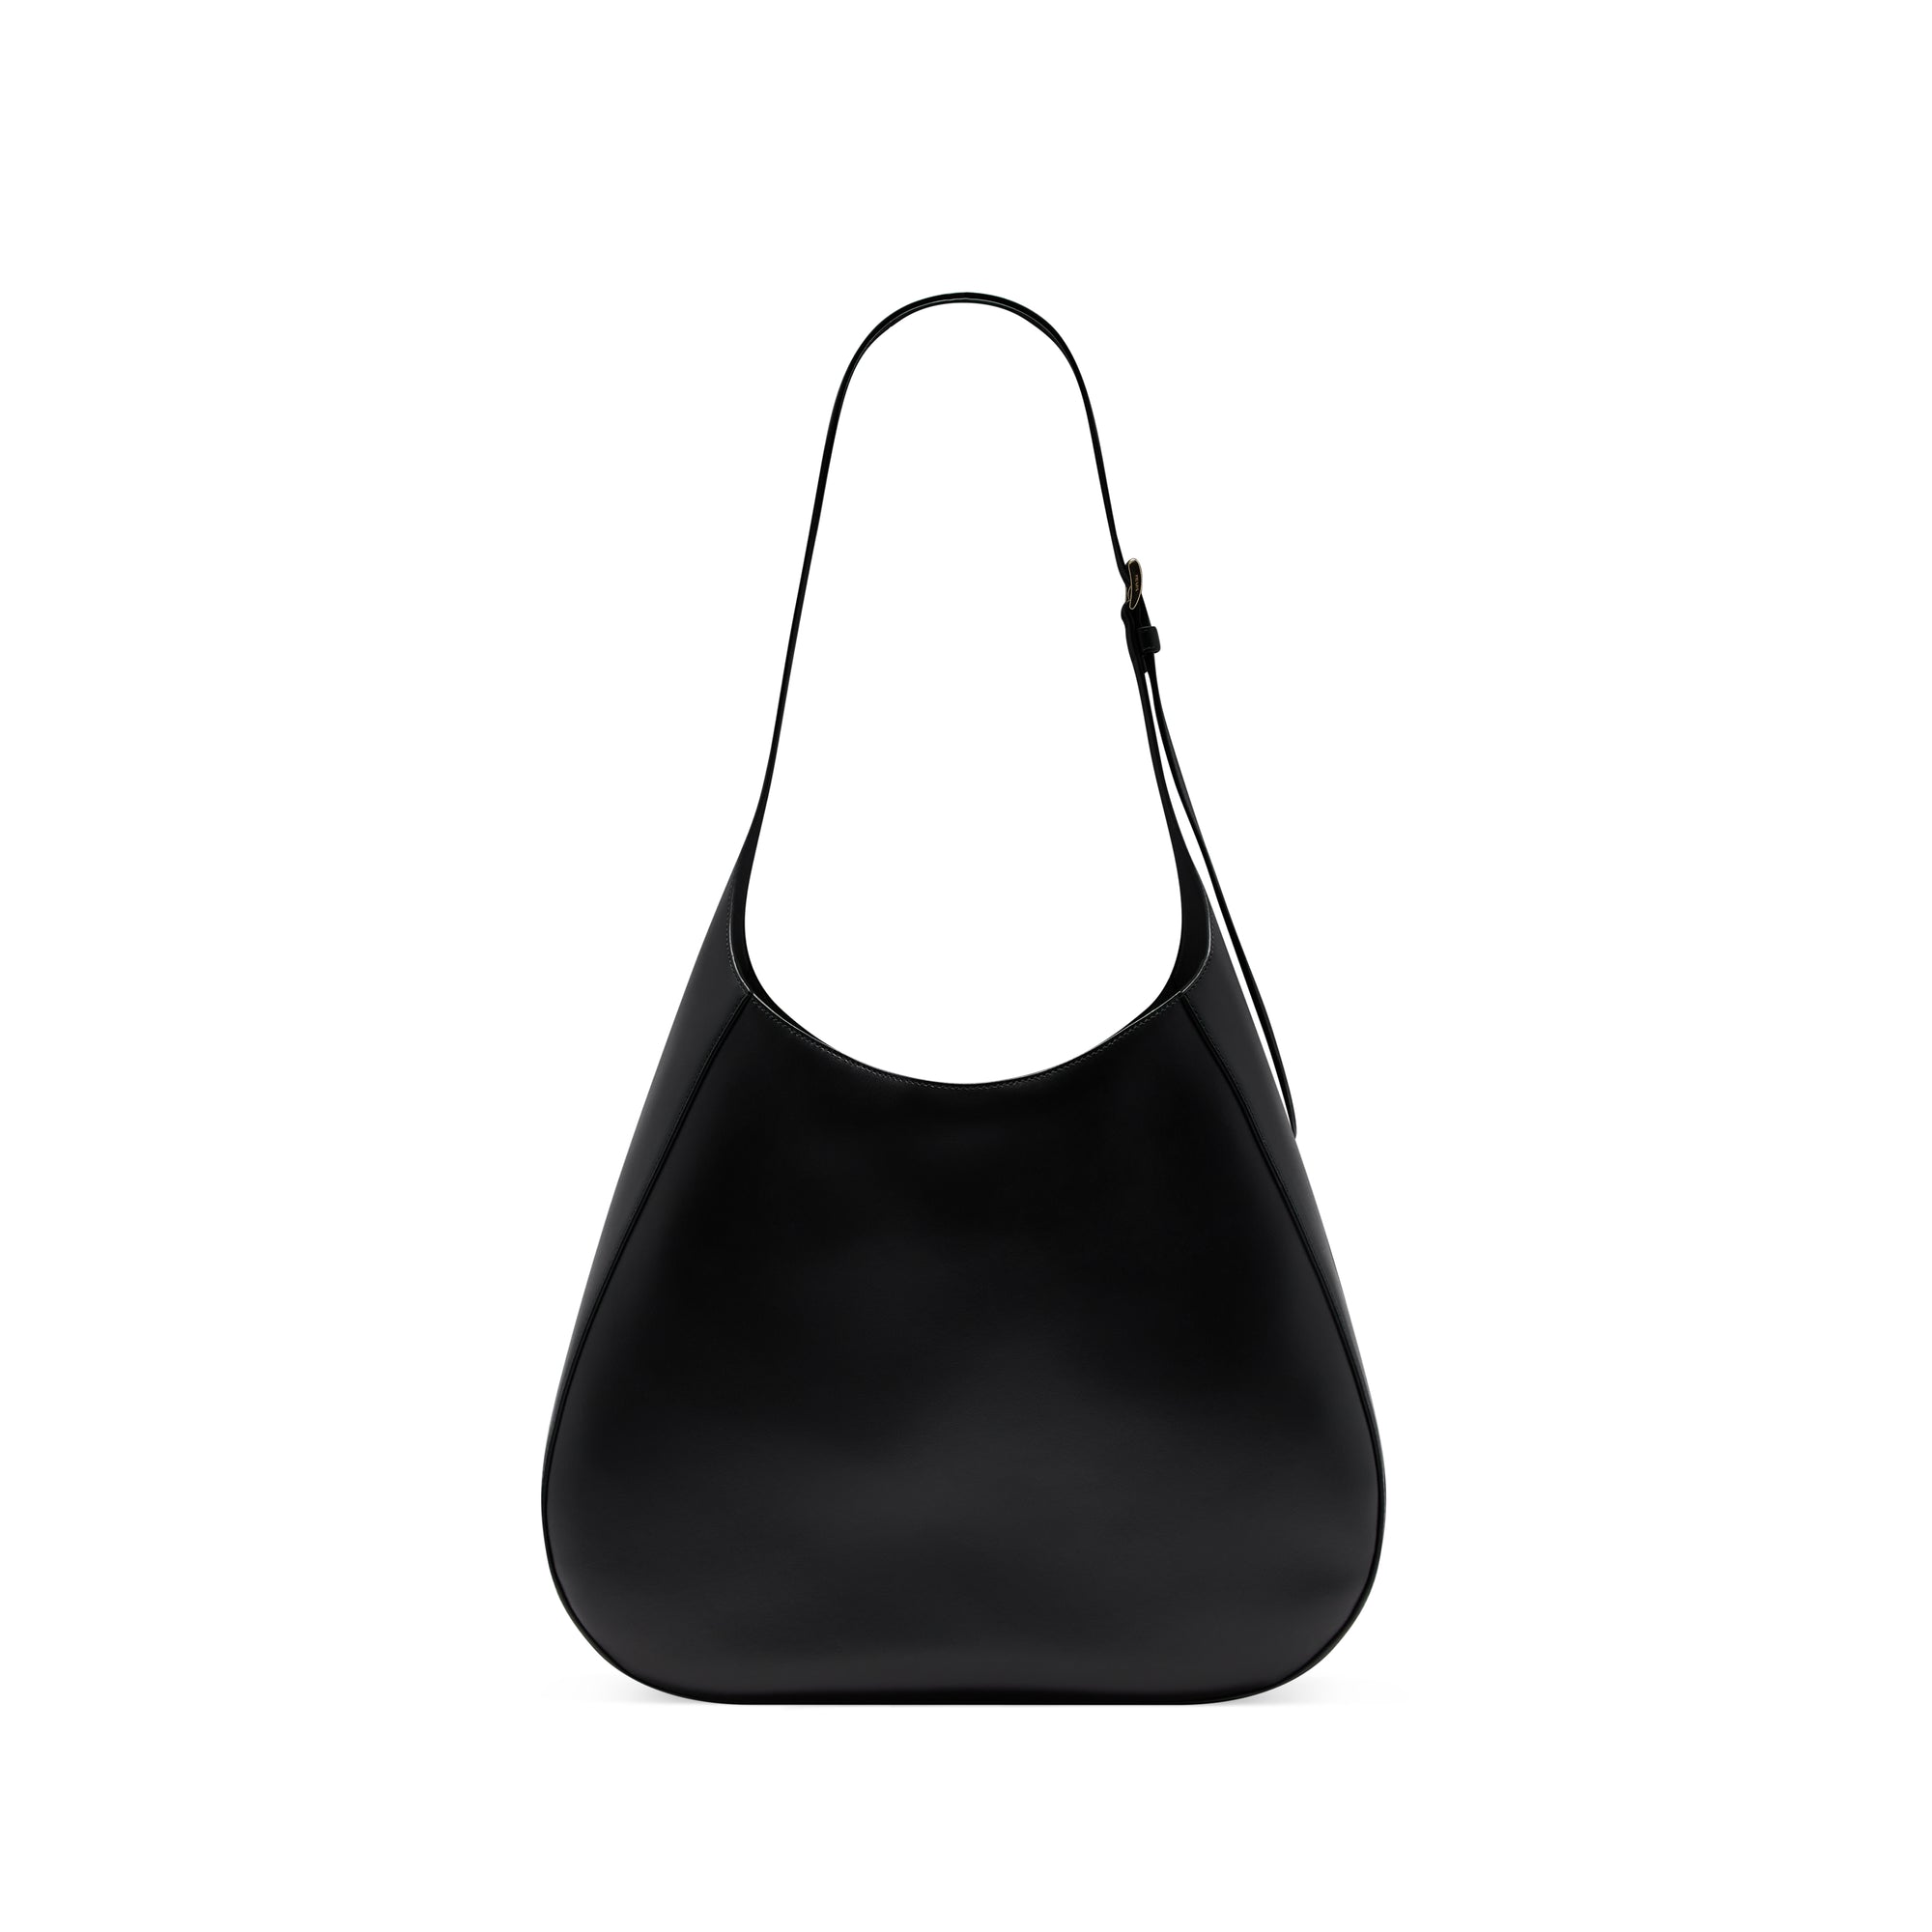 Prada - Women’s Large Leather Shoulder Bag - (Black) view 3